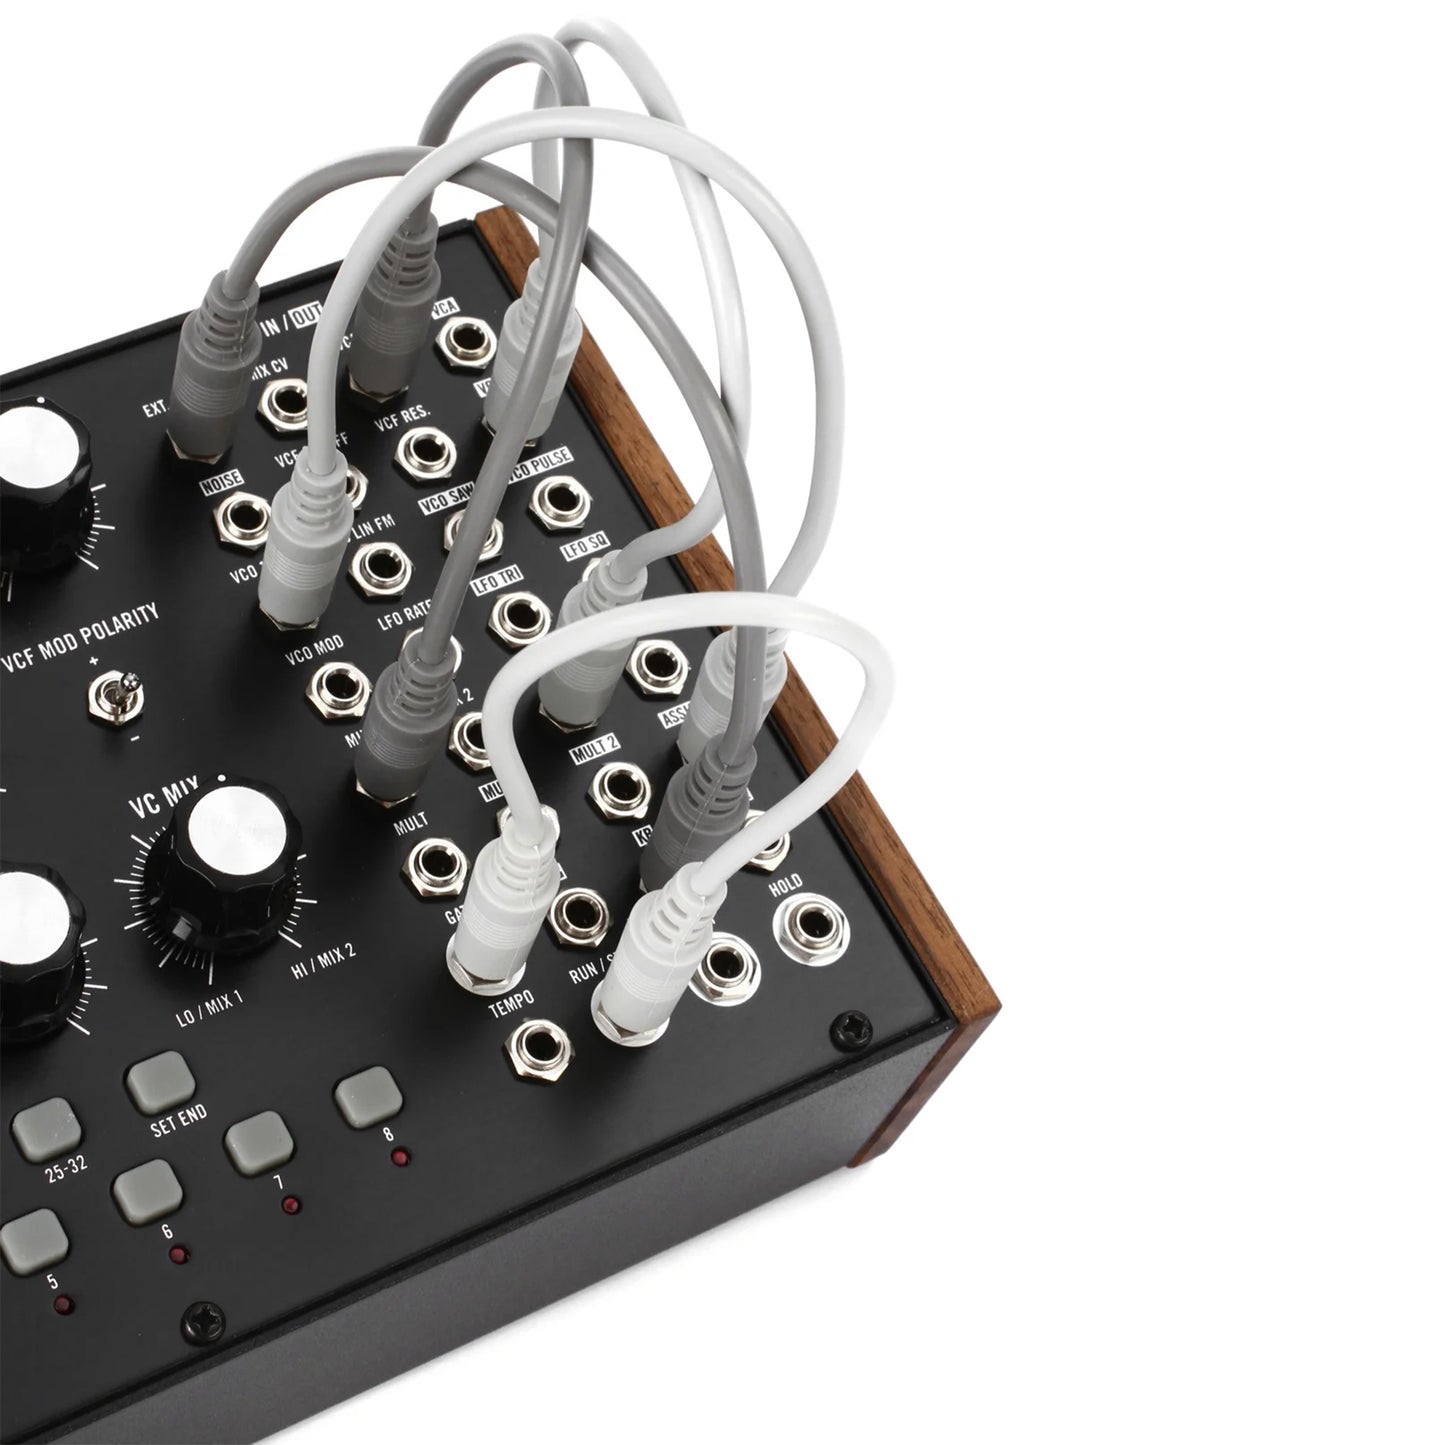 Moog Mother-32 Tabletop Semi-Modular Analogue Synthesizer